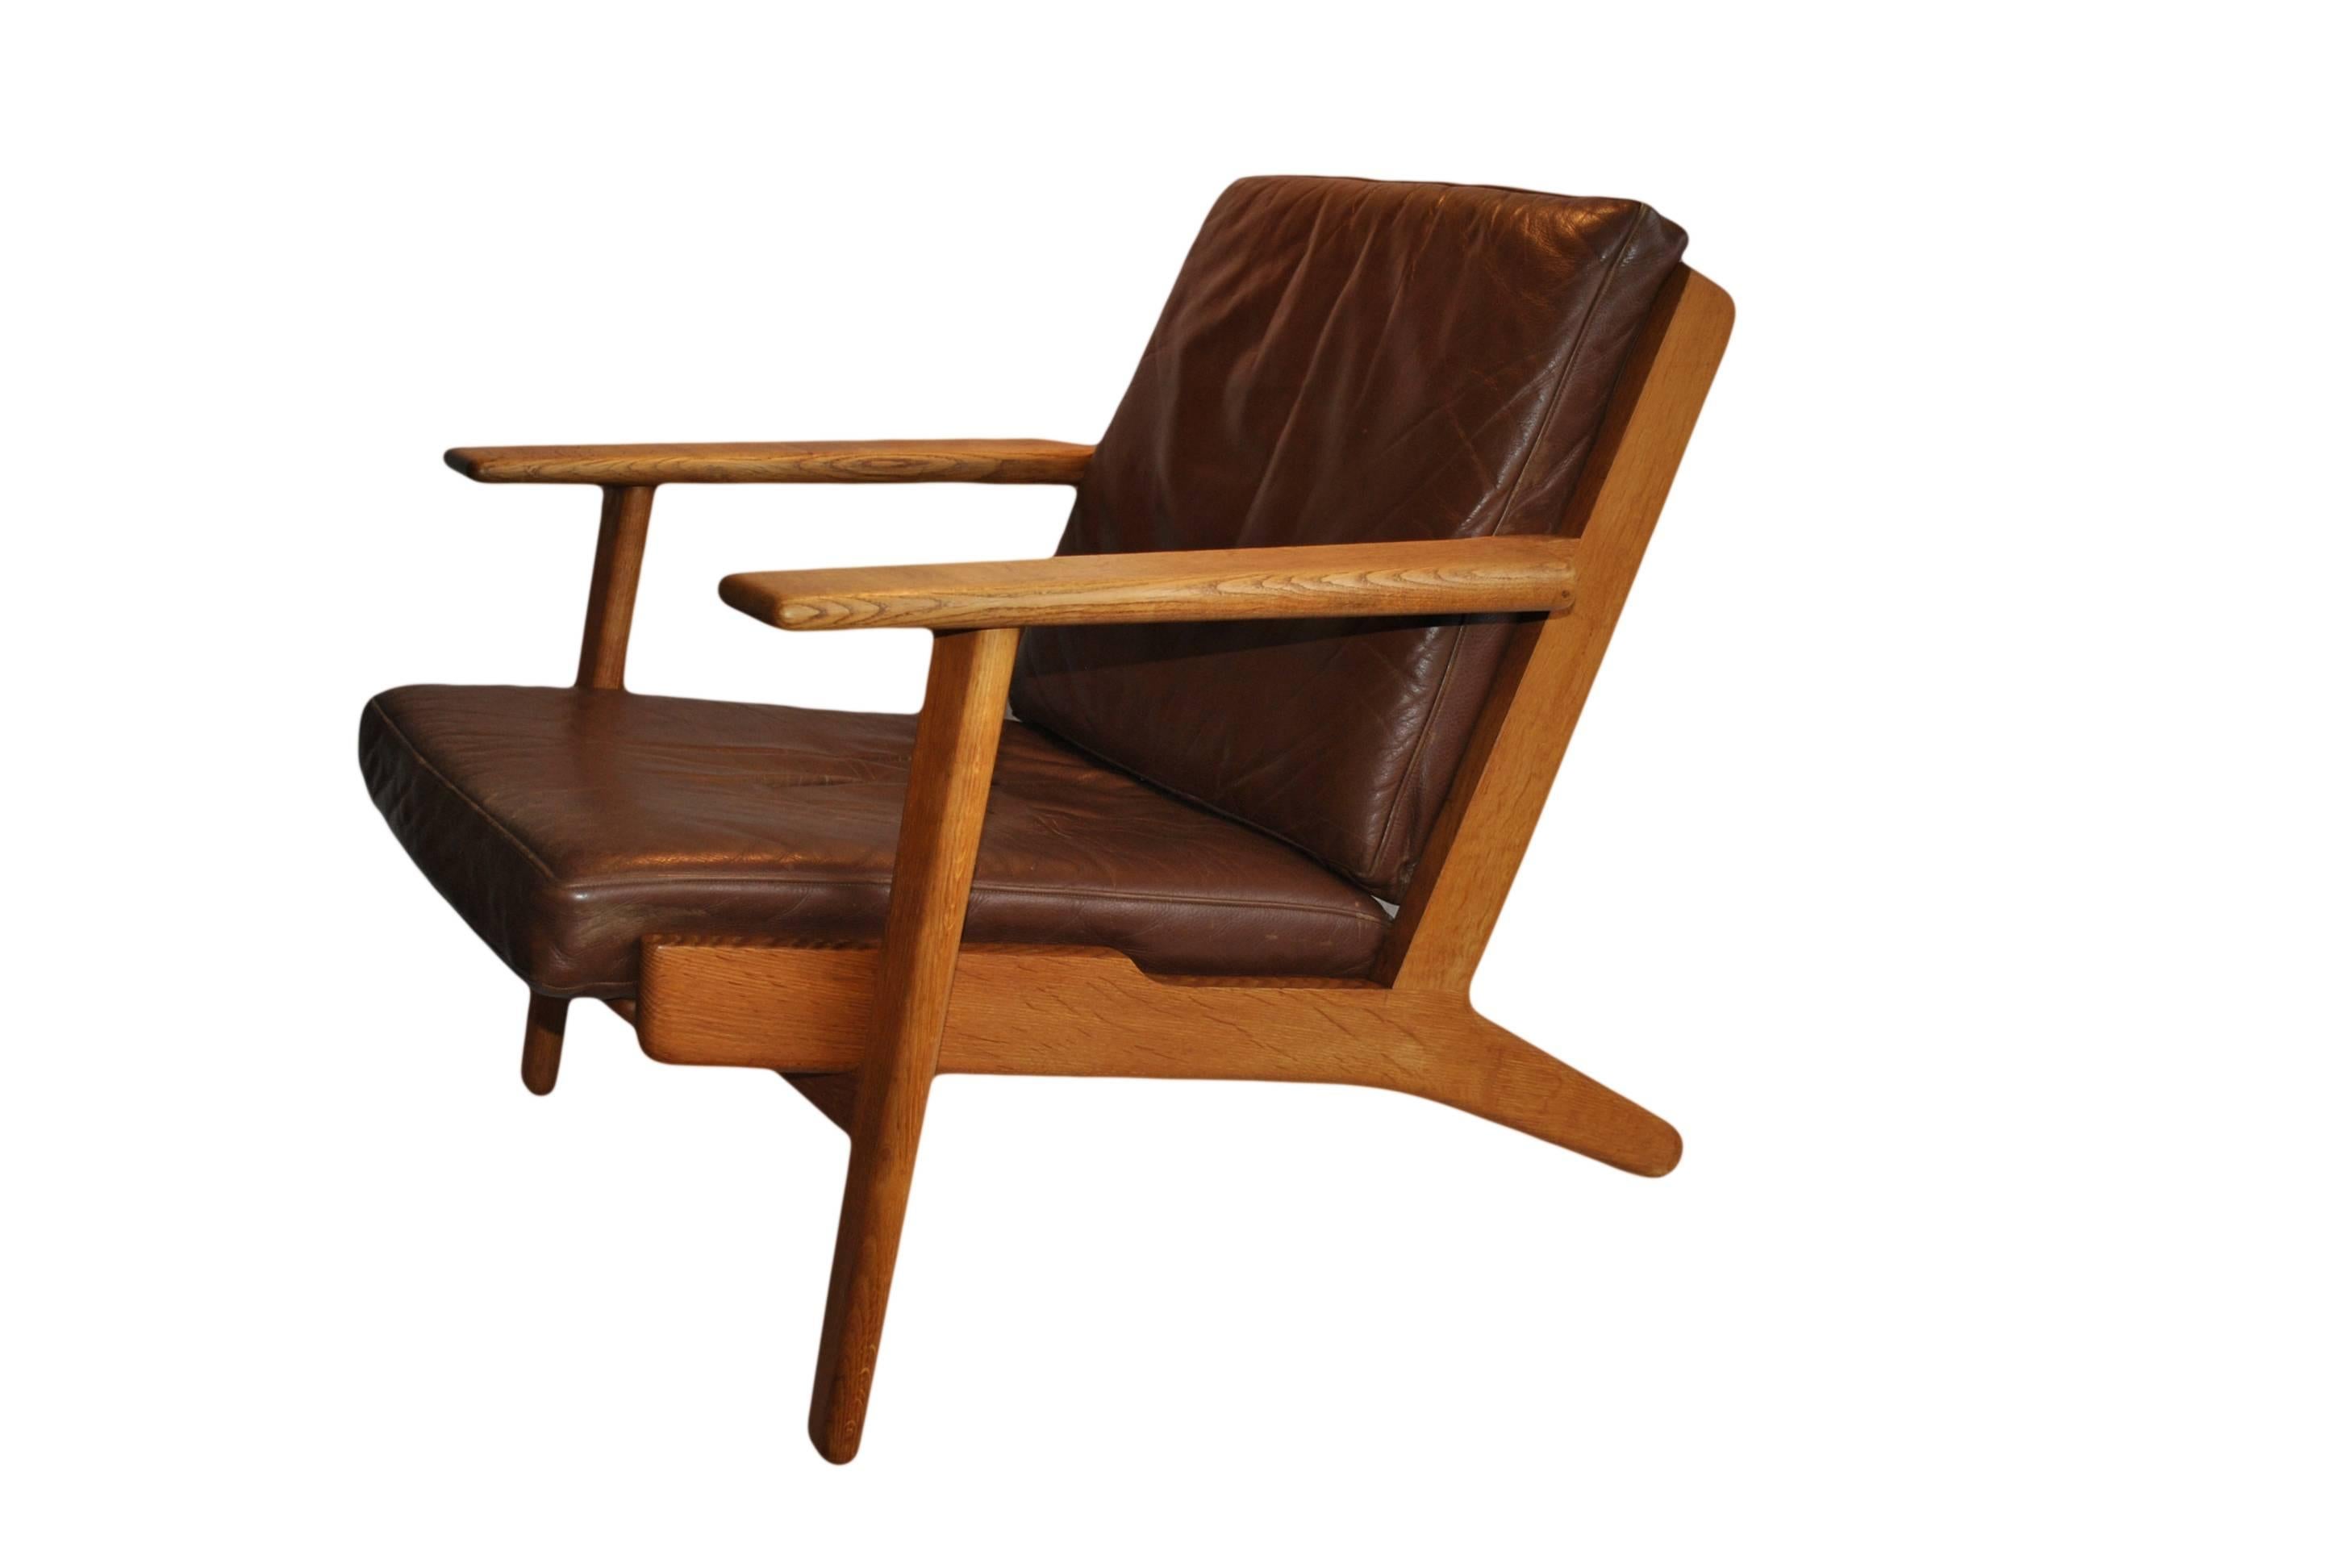 20th Century Pair of Hans J Wegner ge290 Oak Lounge Chairs, 1950s. Refurbished.